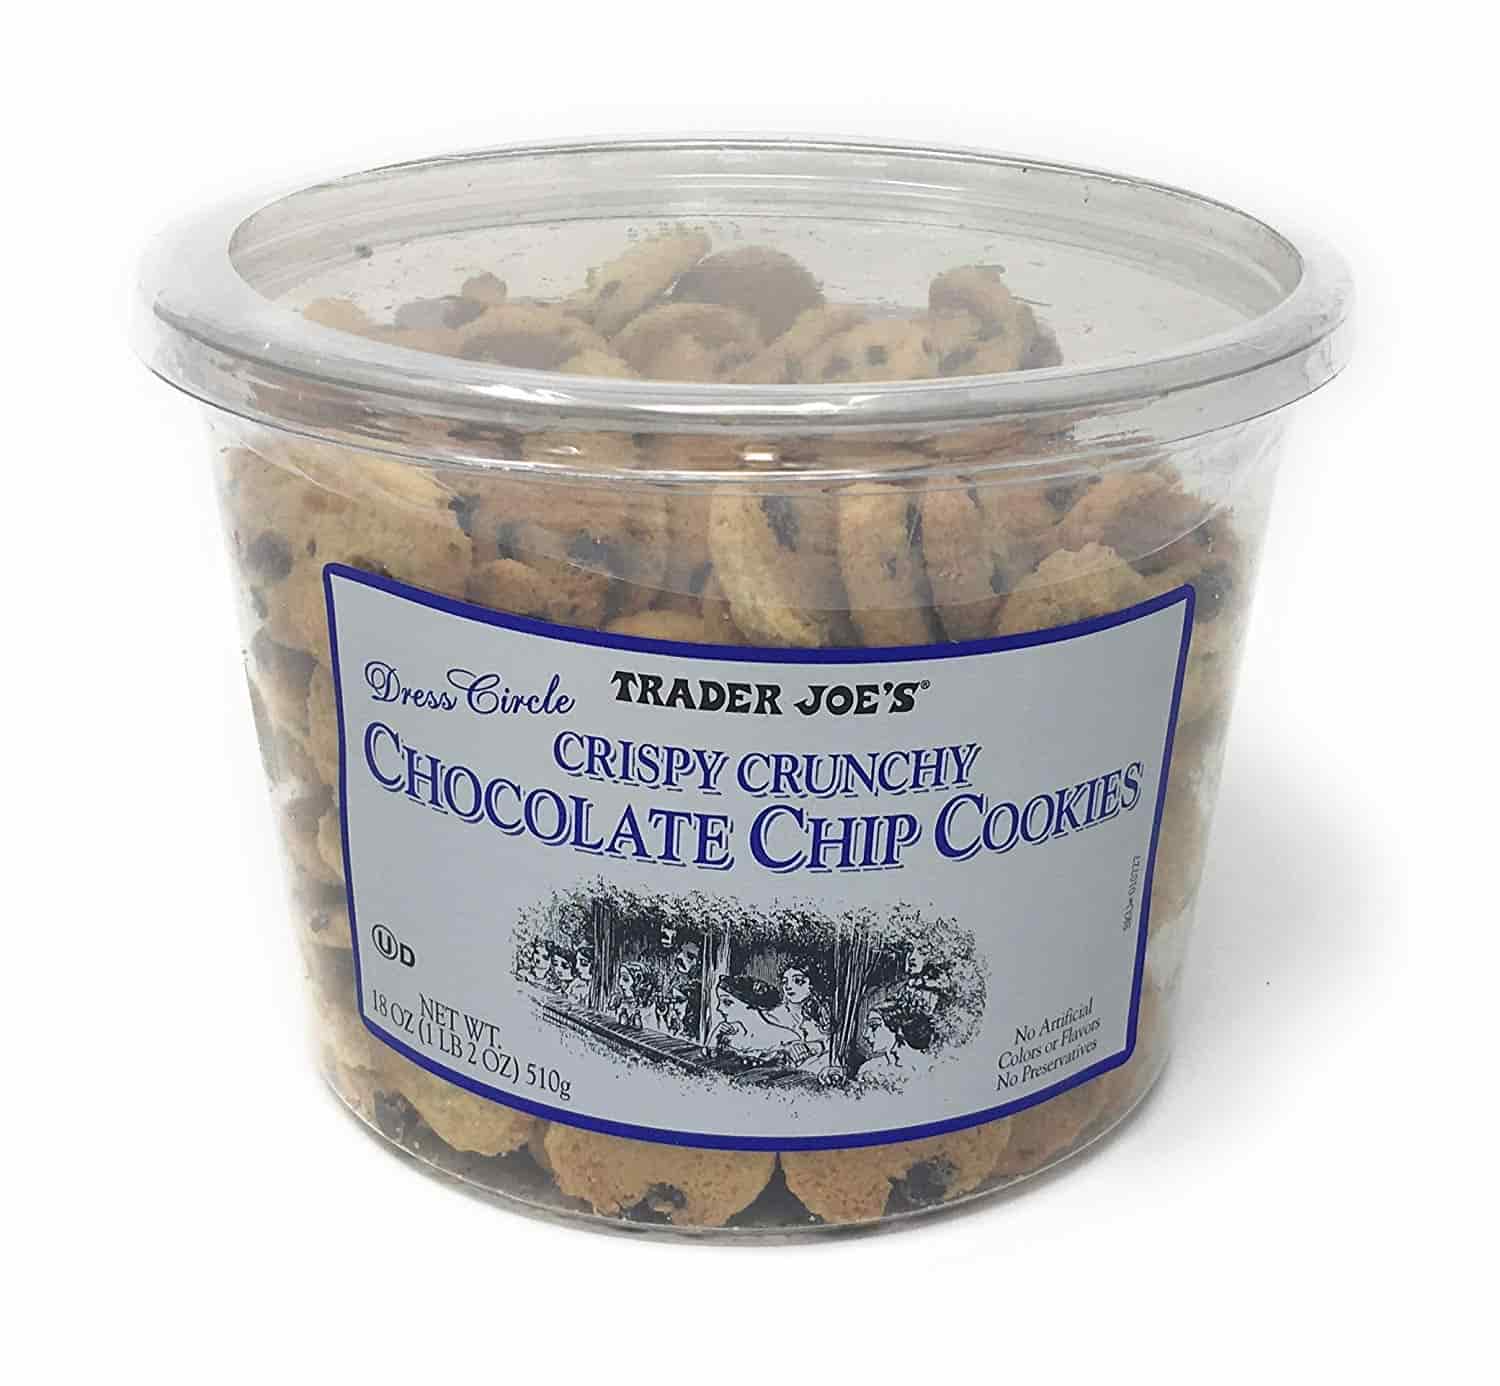 Trader Joe's: Chocolate Chip Cookie Brand